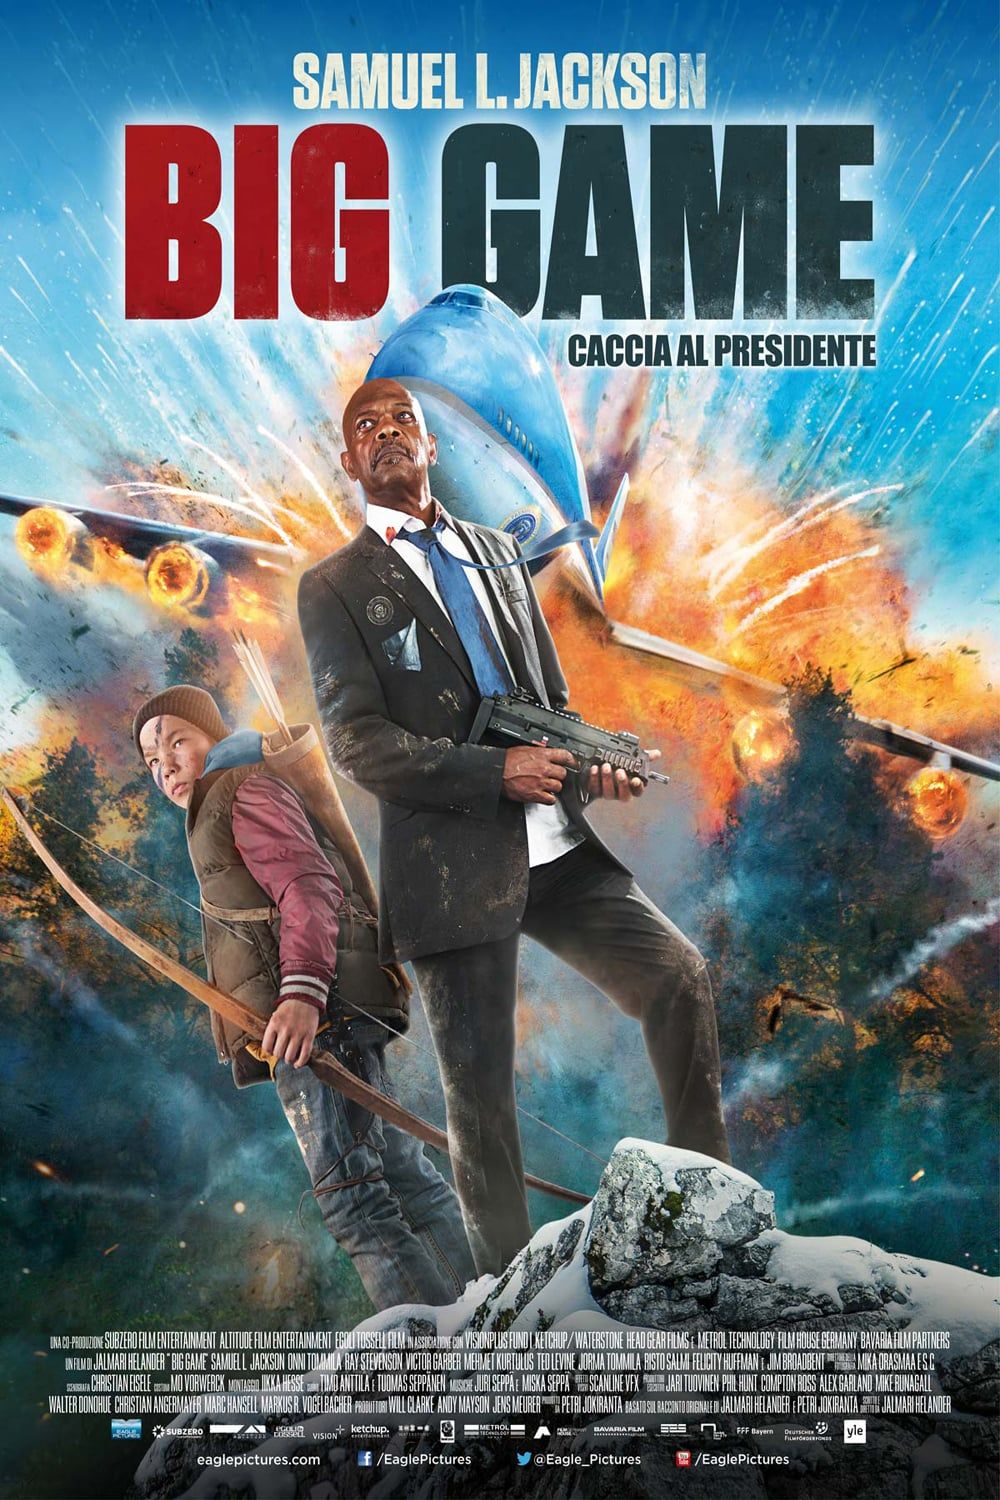 Big Game (2014) Hindi Dubbed